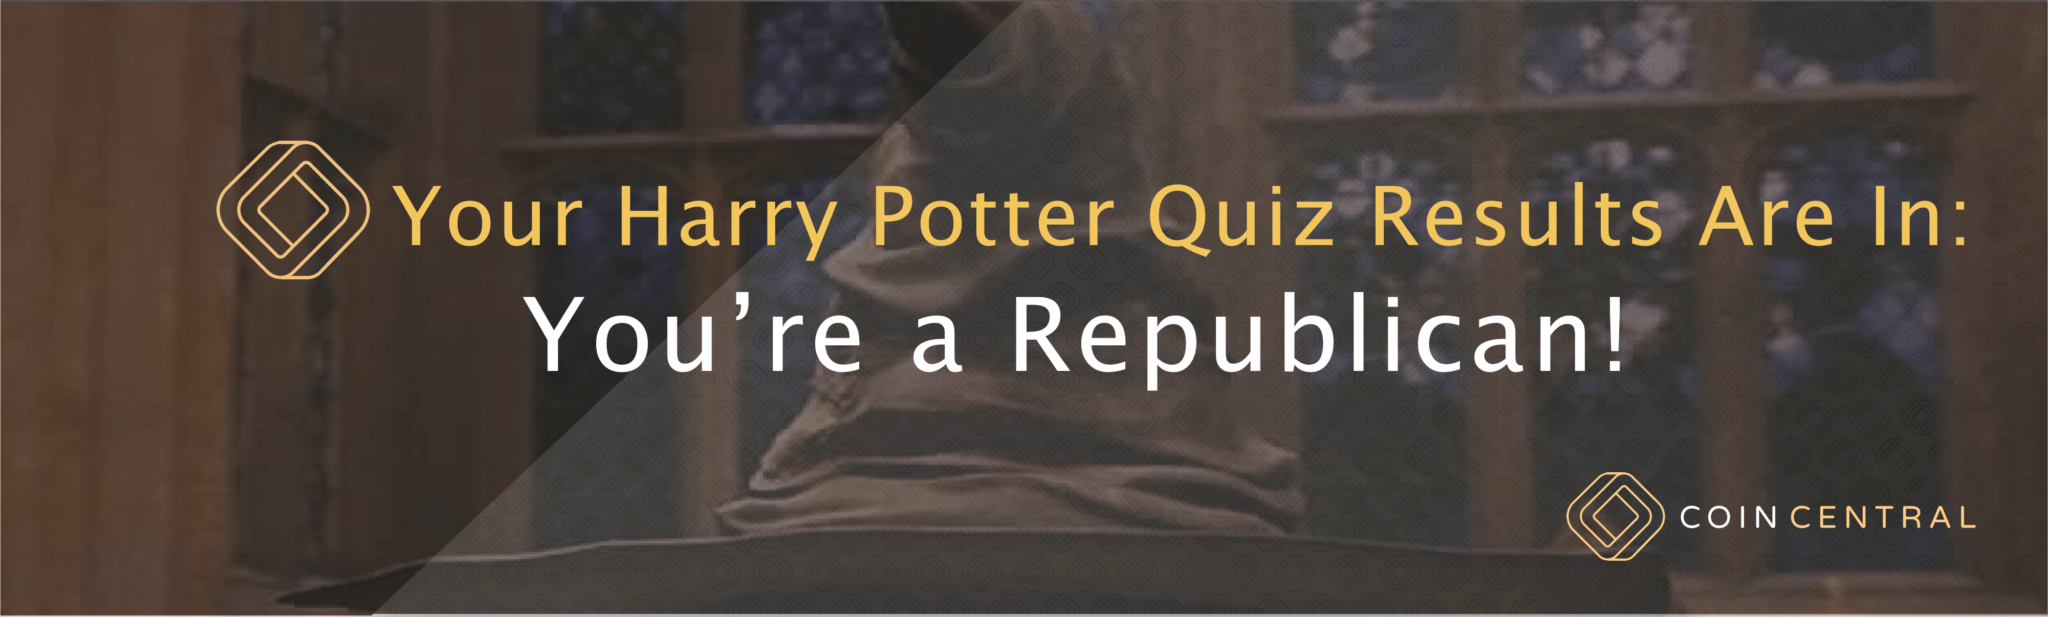 Harry Potter-quiz